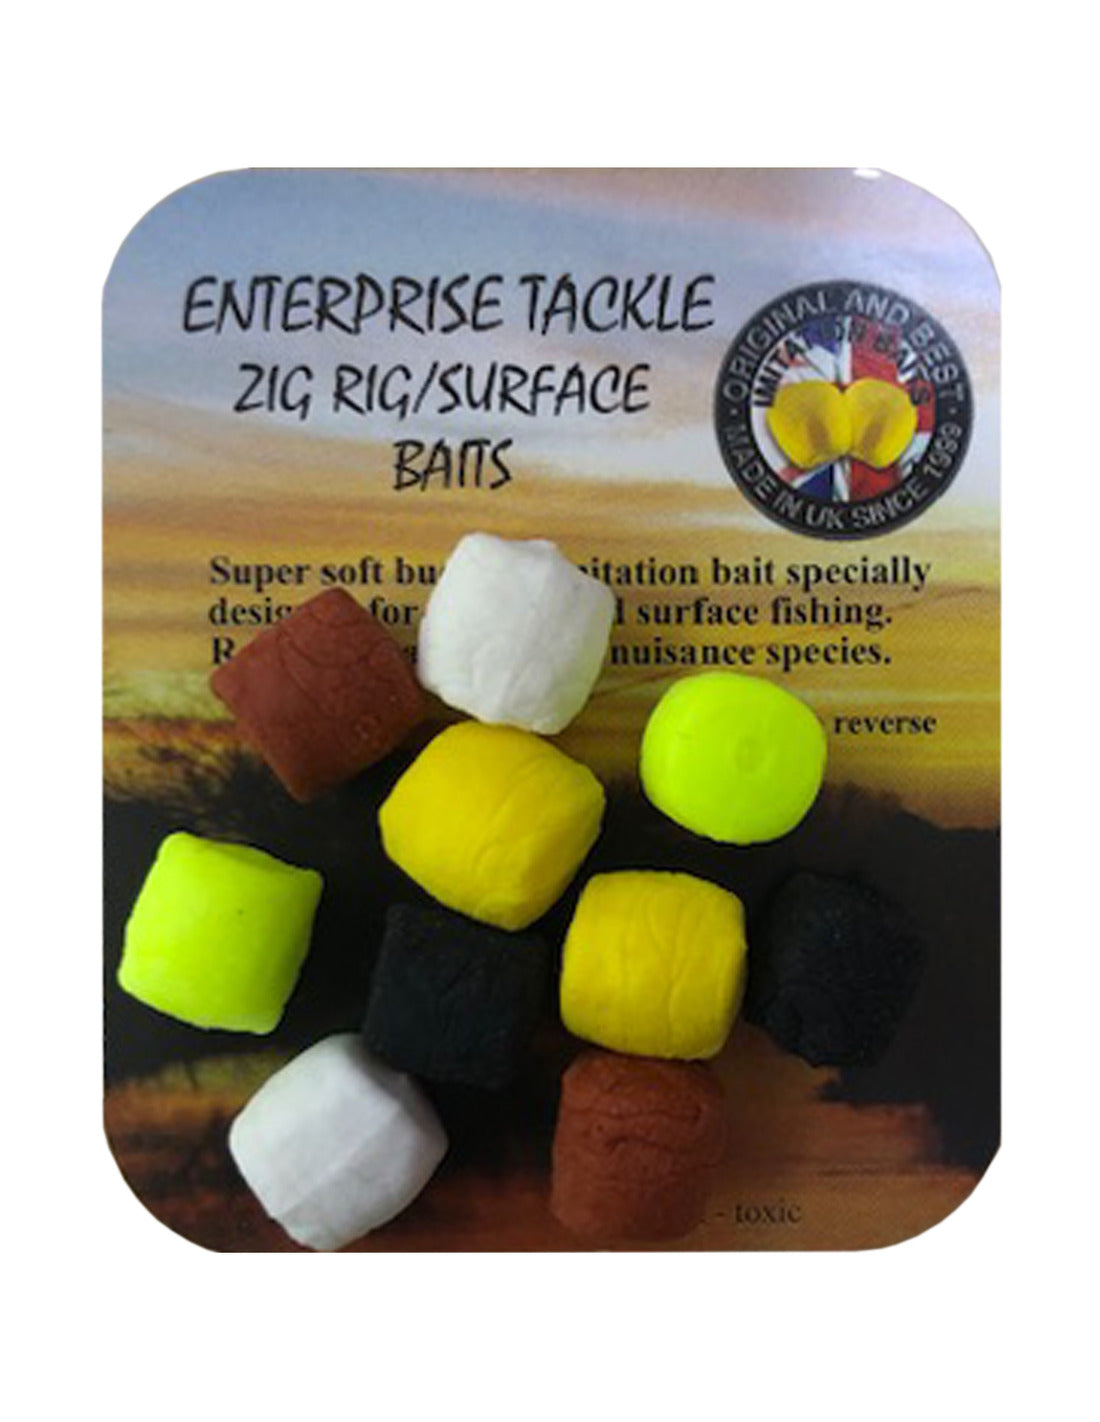 Zig Rig & Surface Bait Enterprise Tackle Colores Mixtos